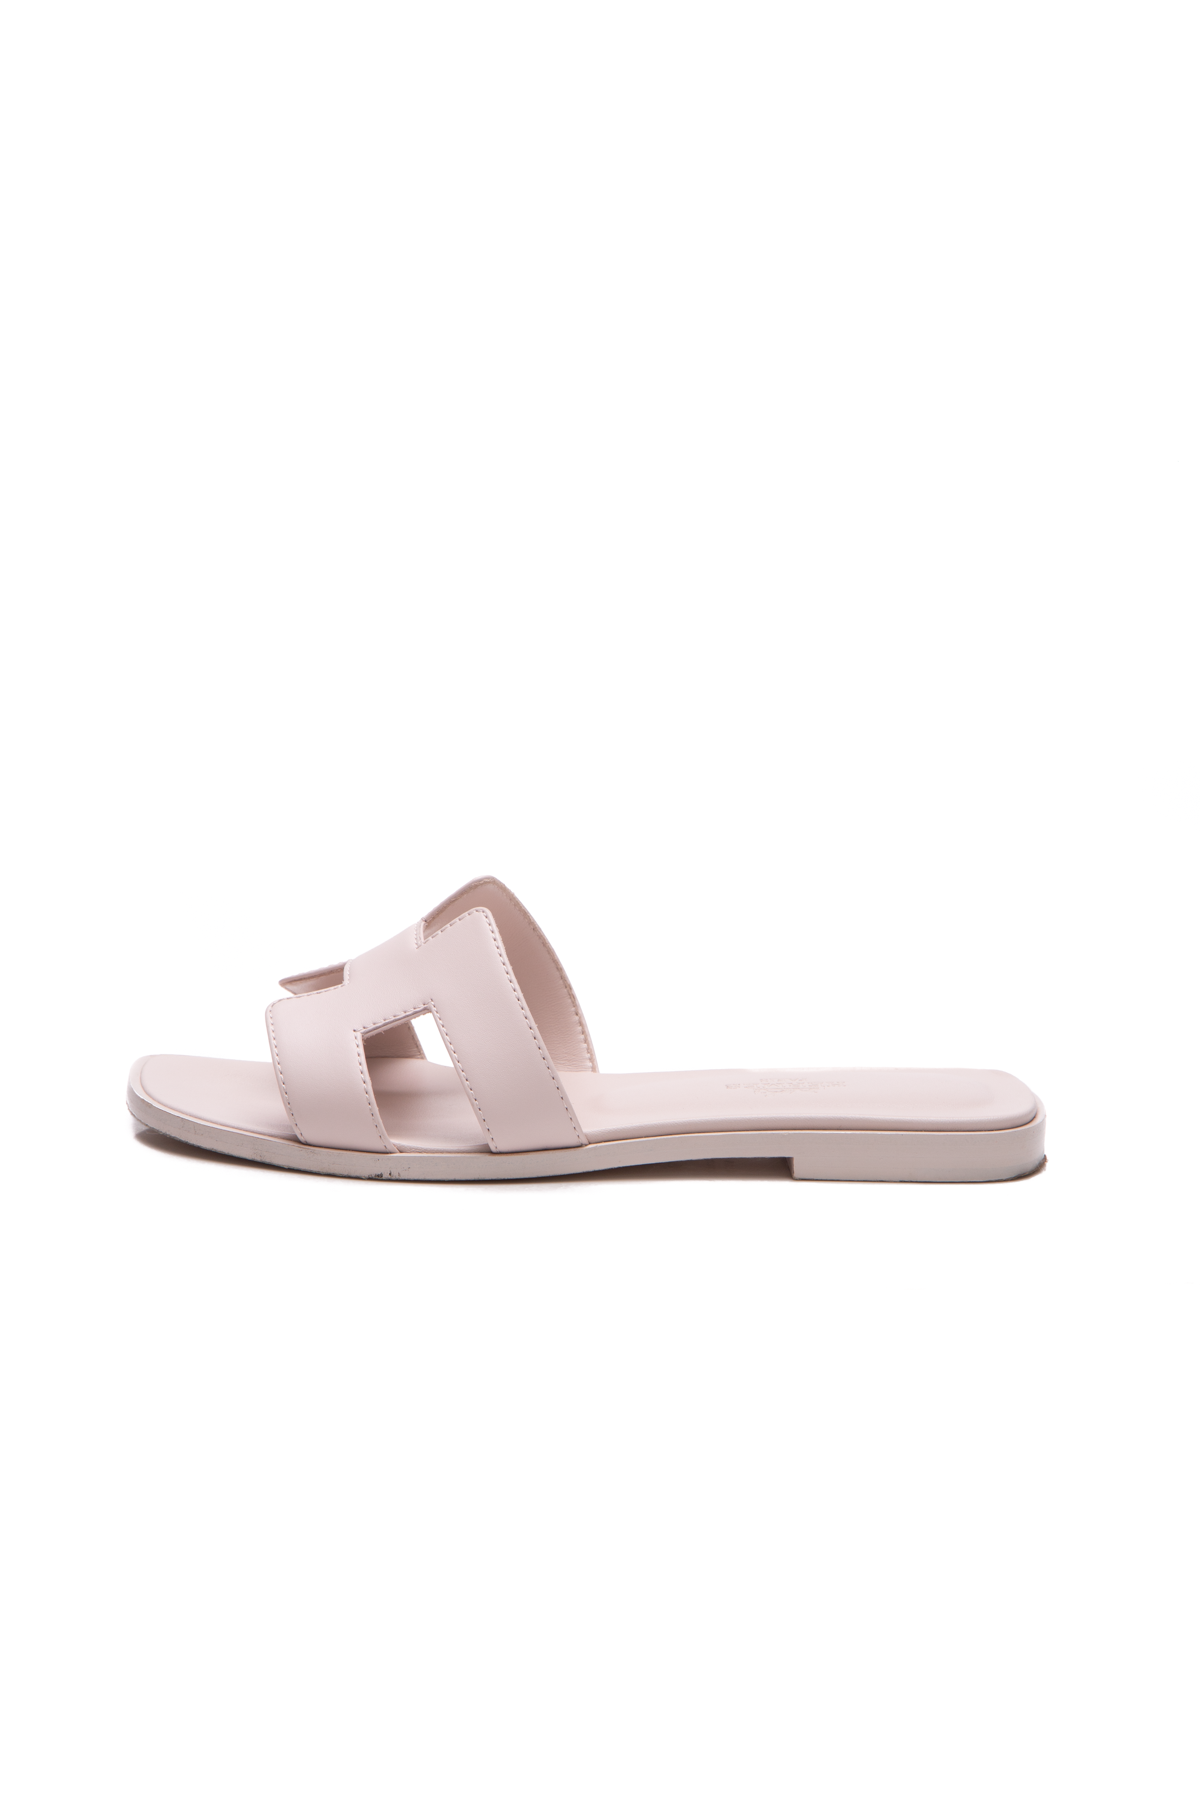 Chanel White Sandals - Shop on Pinterest